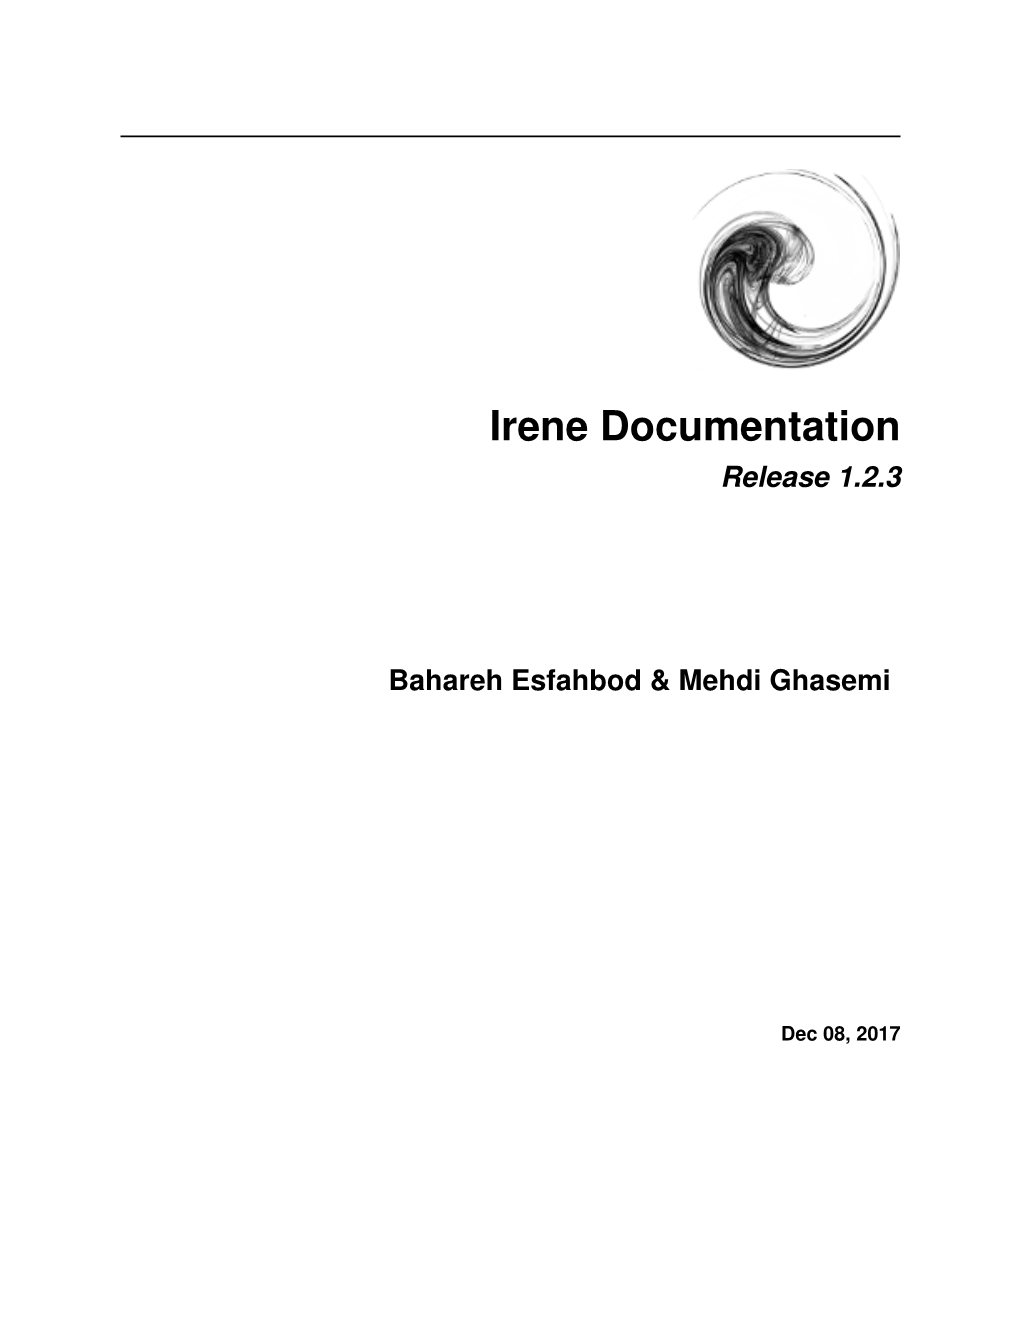 Irene Documentation Release 1.2.3